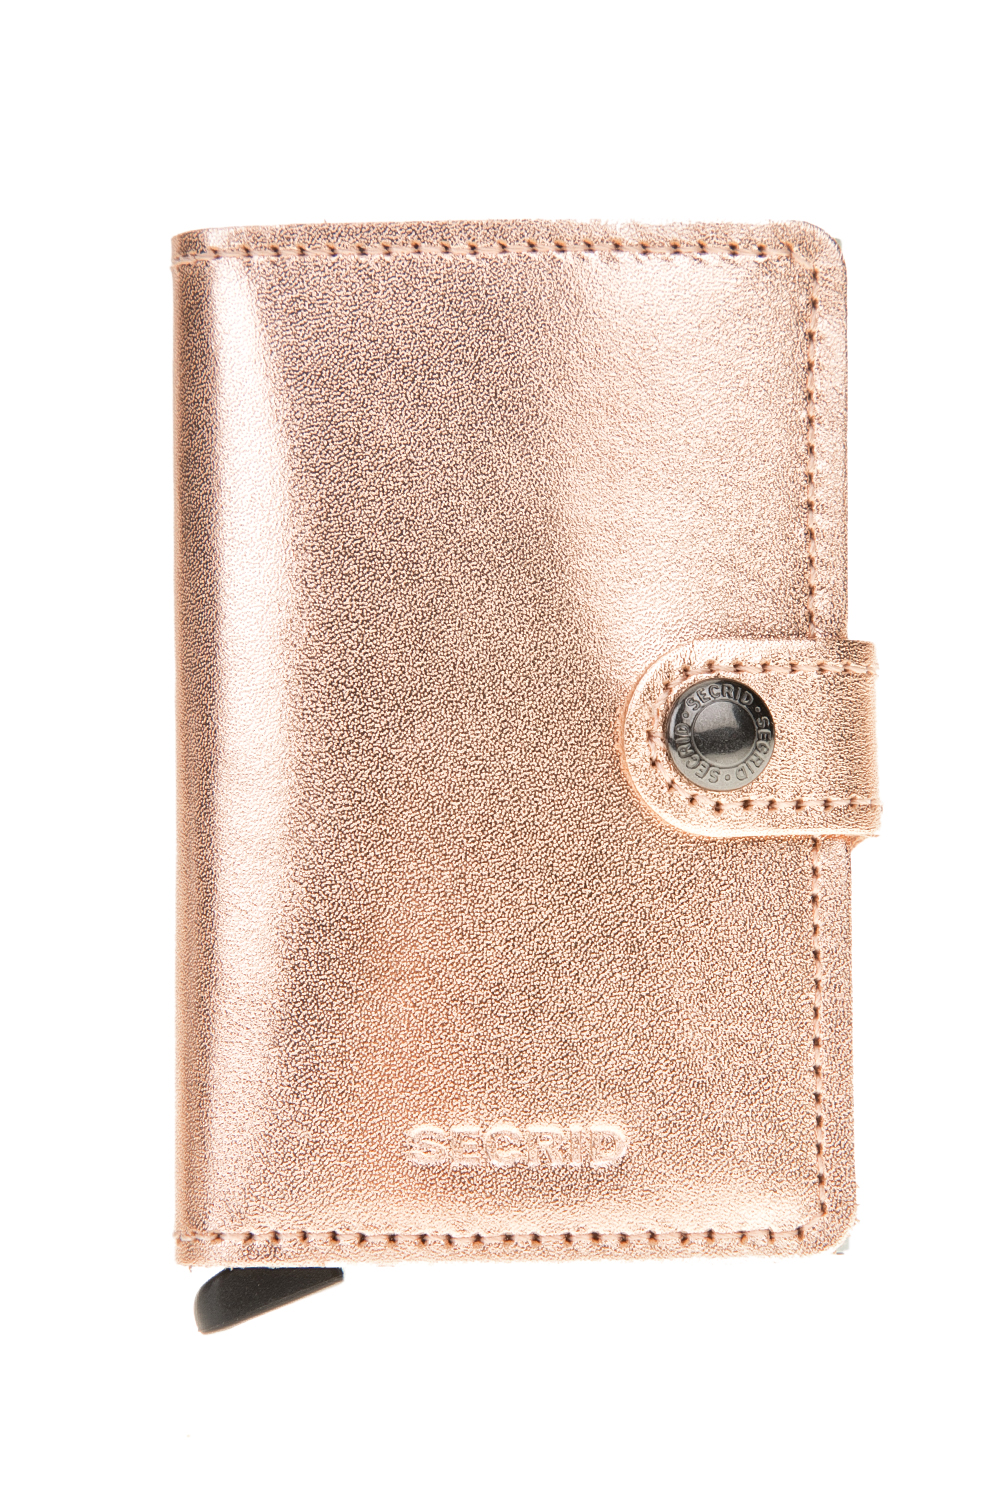 SECRID – Θηκη καρτων SECRID Miniwallet Metallic ροζ